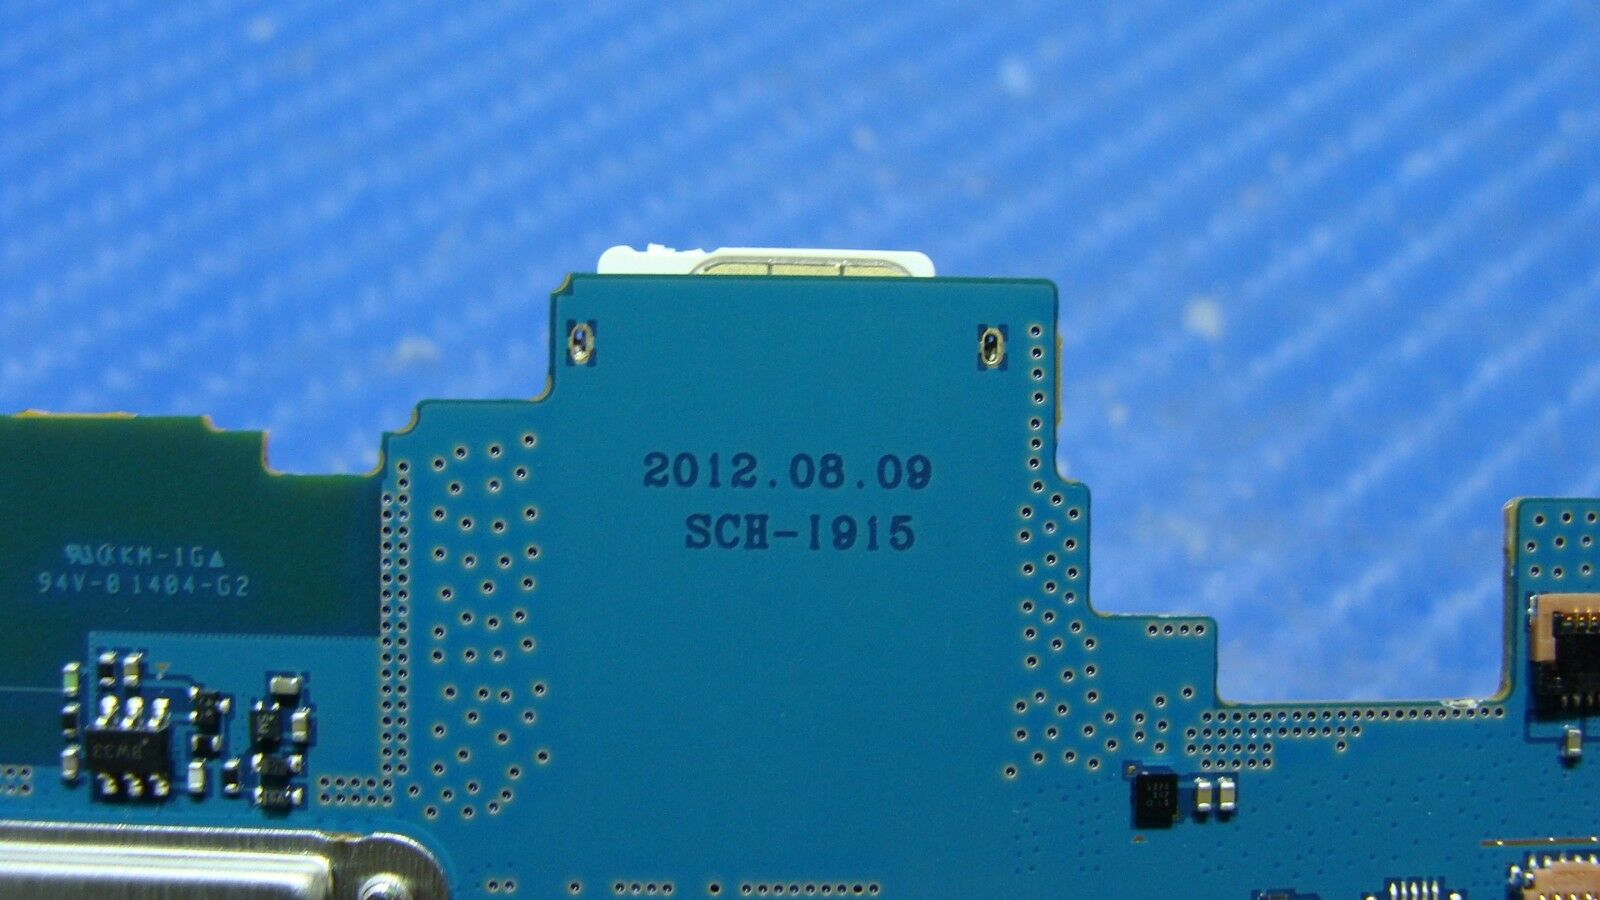 Samsung Galaxy SCH-I915 10.1